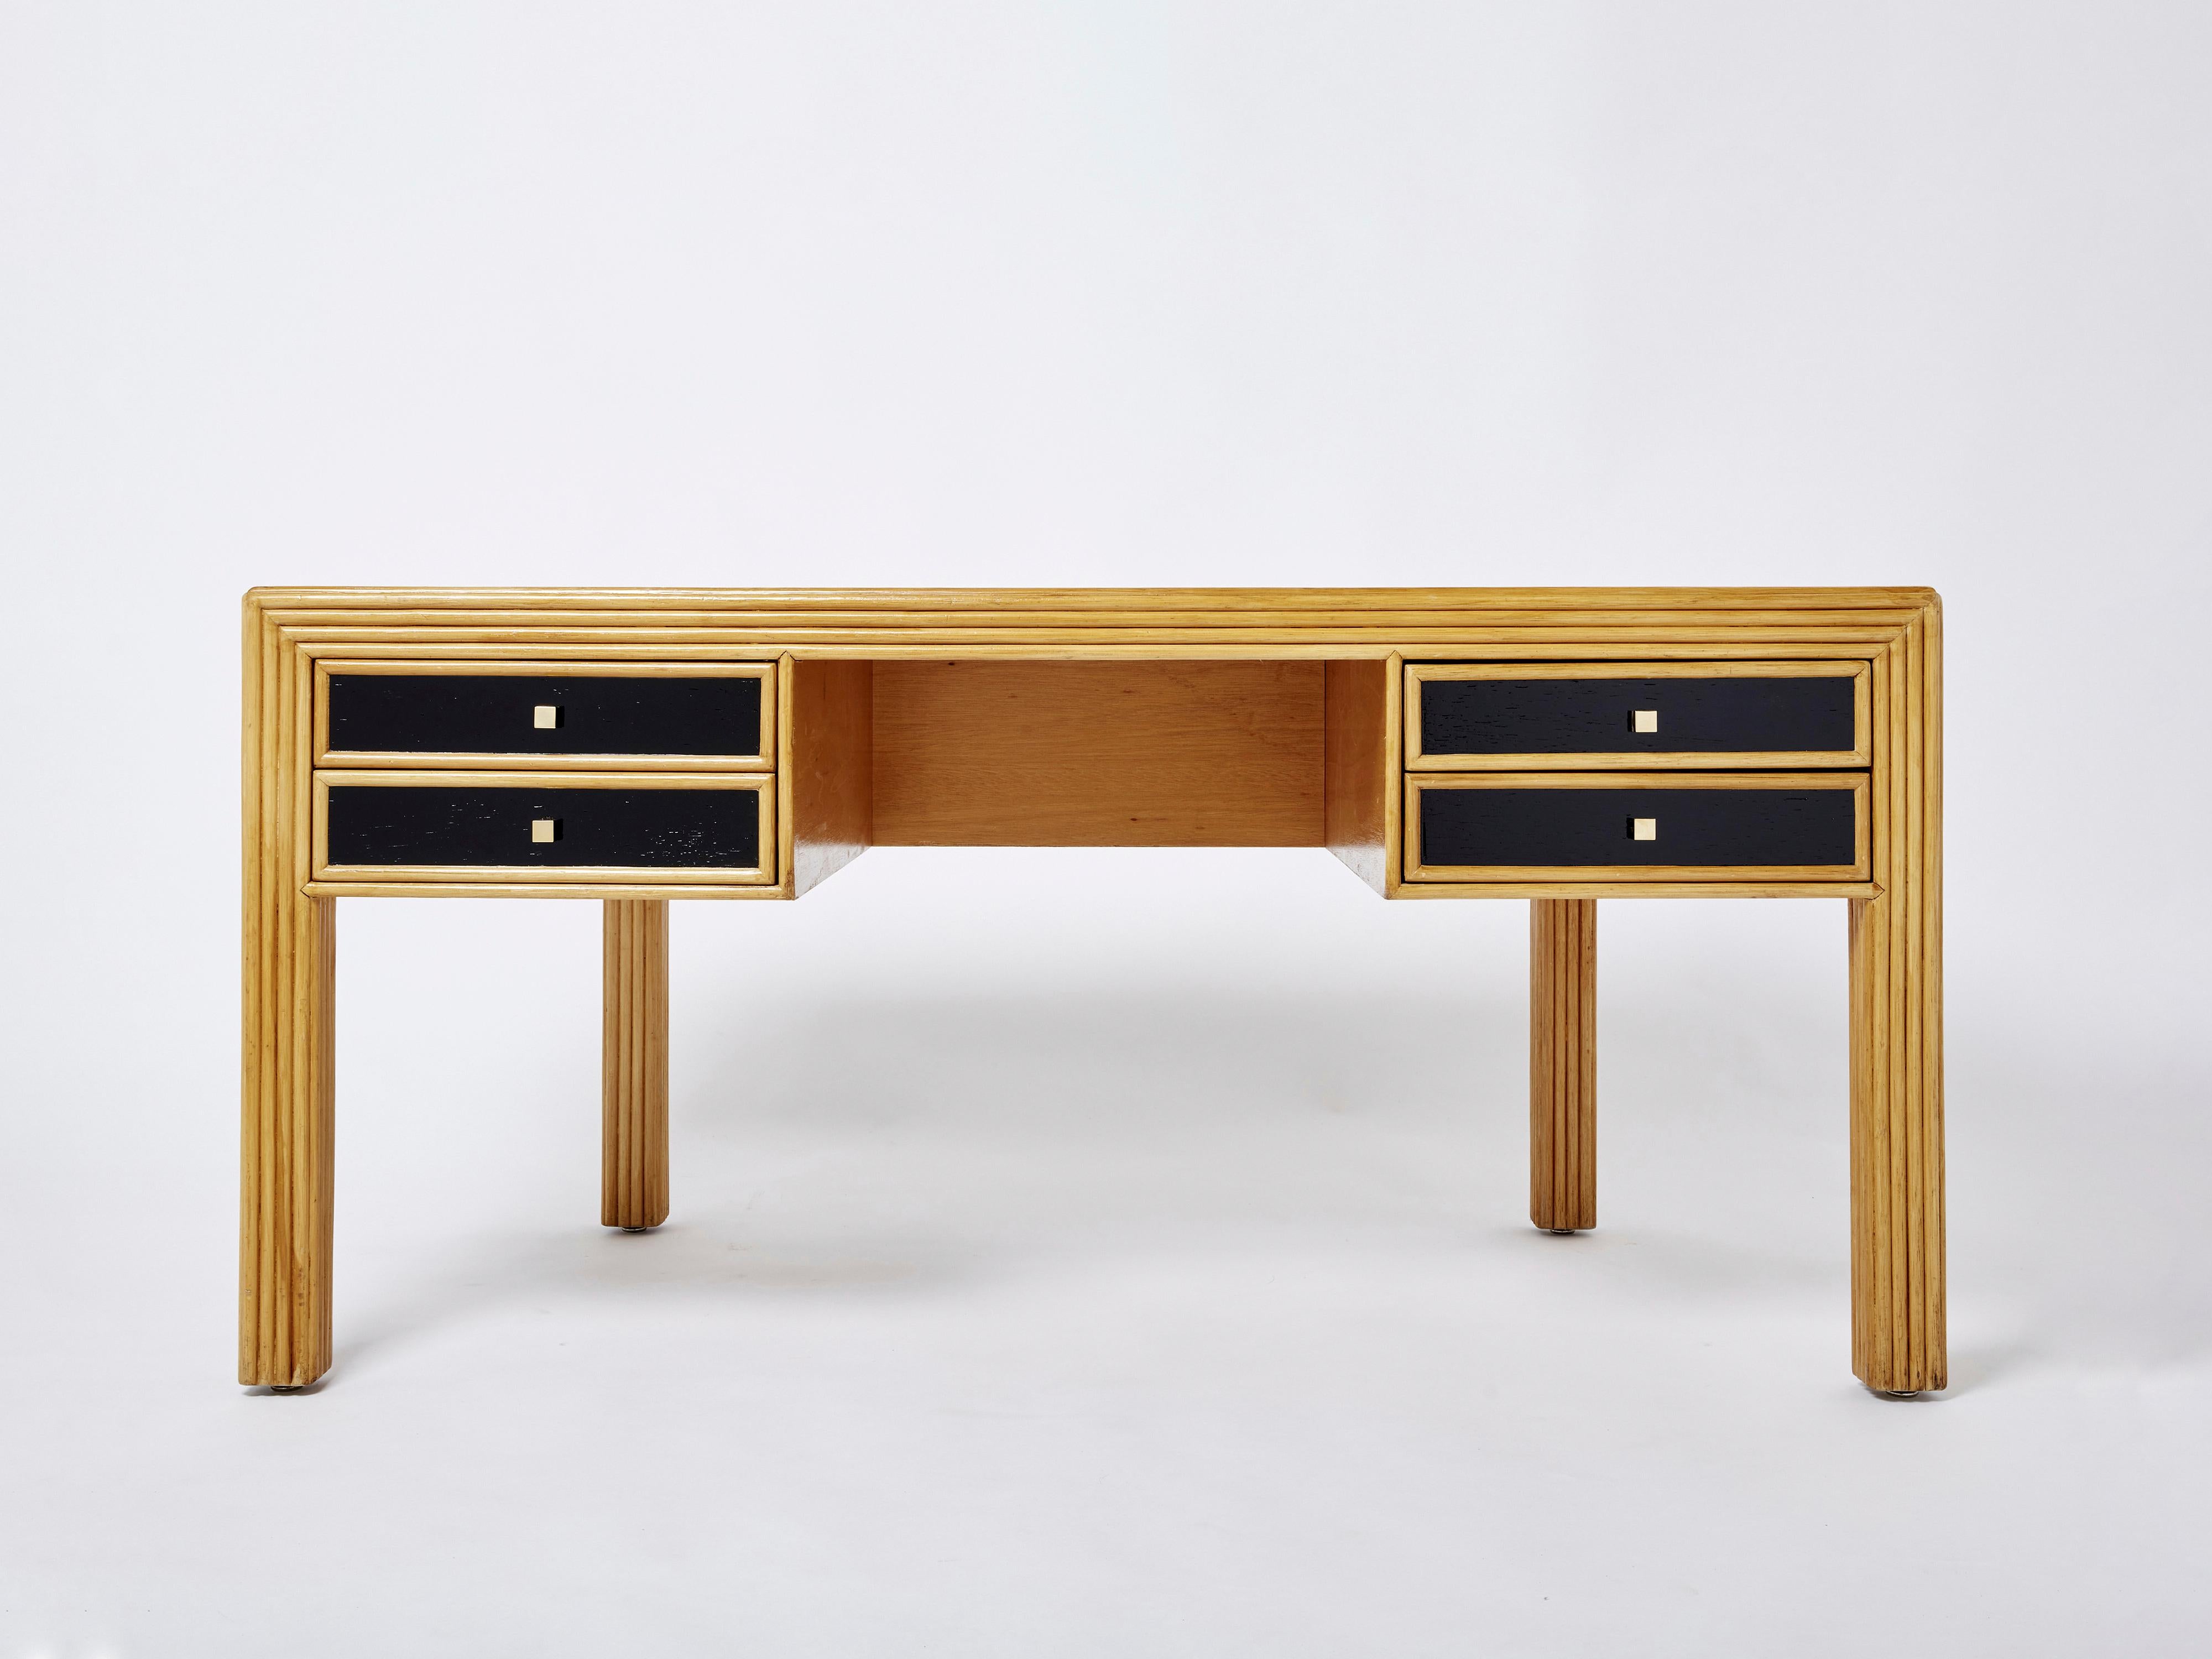 Italian Rattan Black Painted Wood Brass Handles Executive Desk 1970s For Sale 3